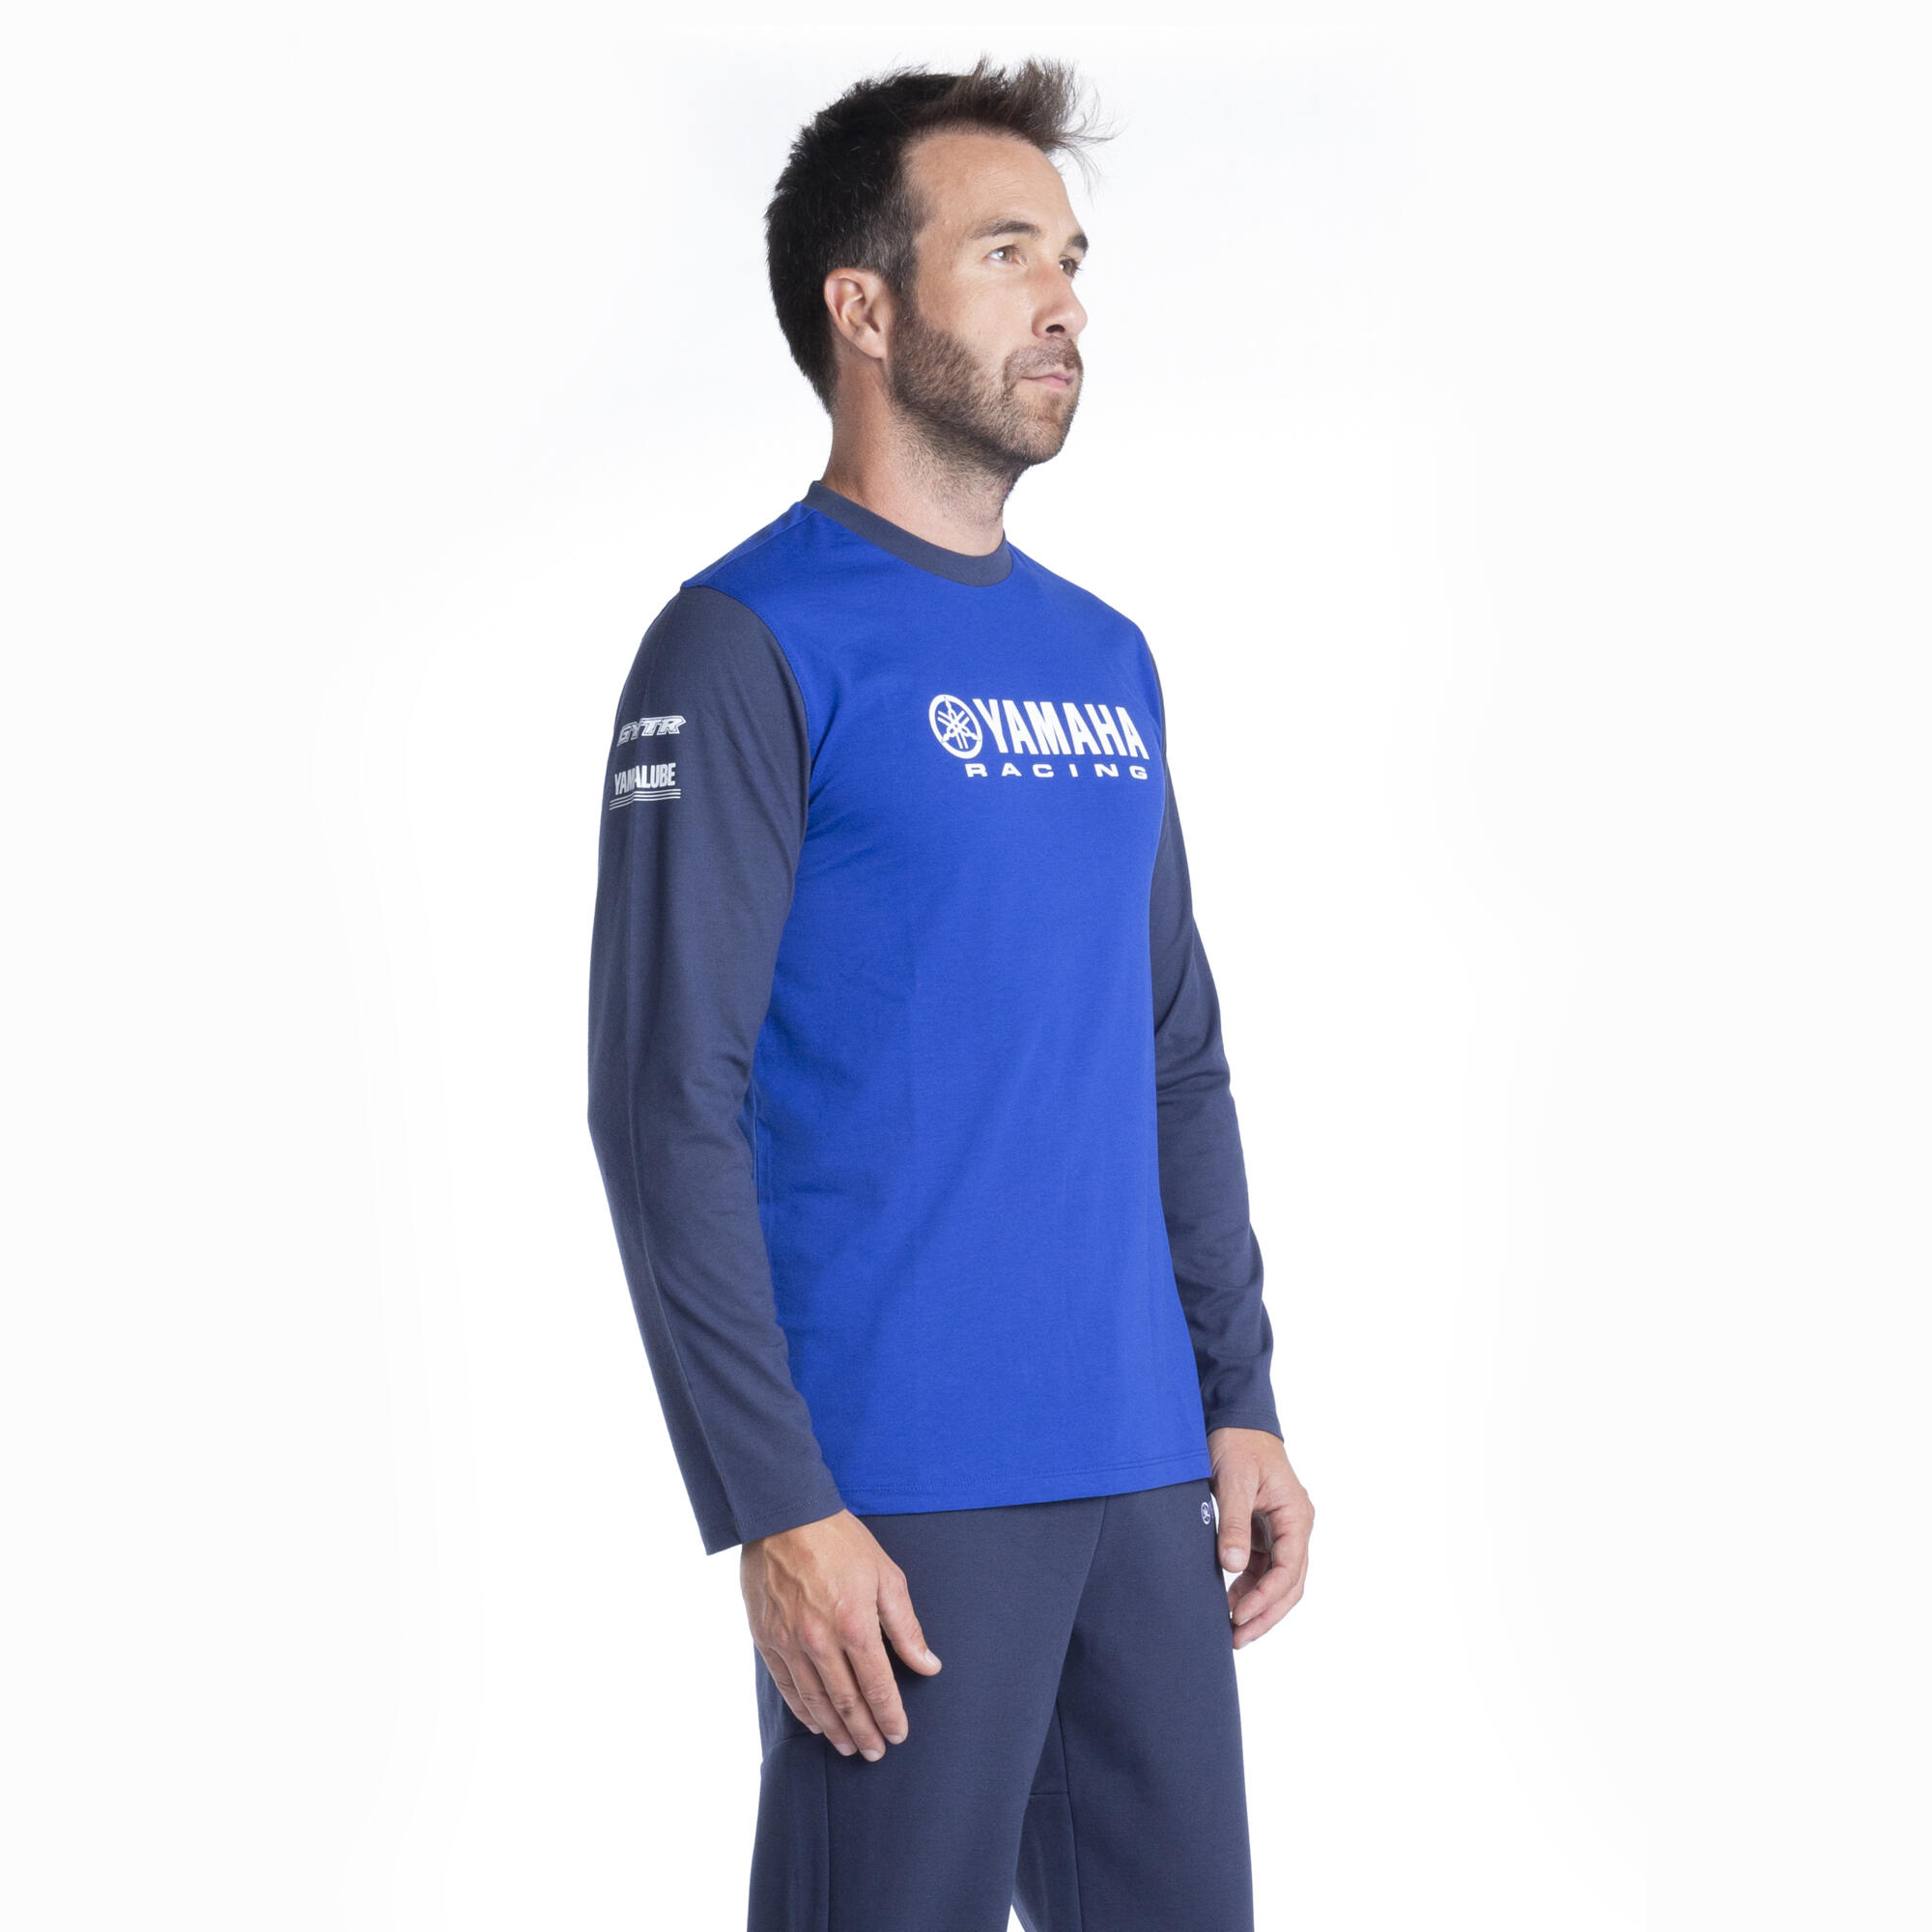 Tee-shirt Paddock Blue pour homme - Yamaha Motor